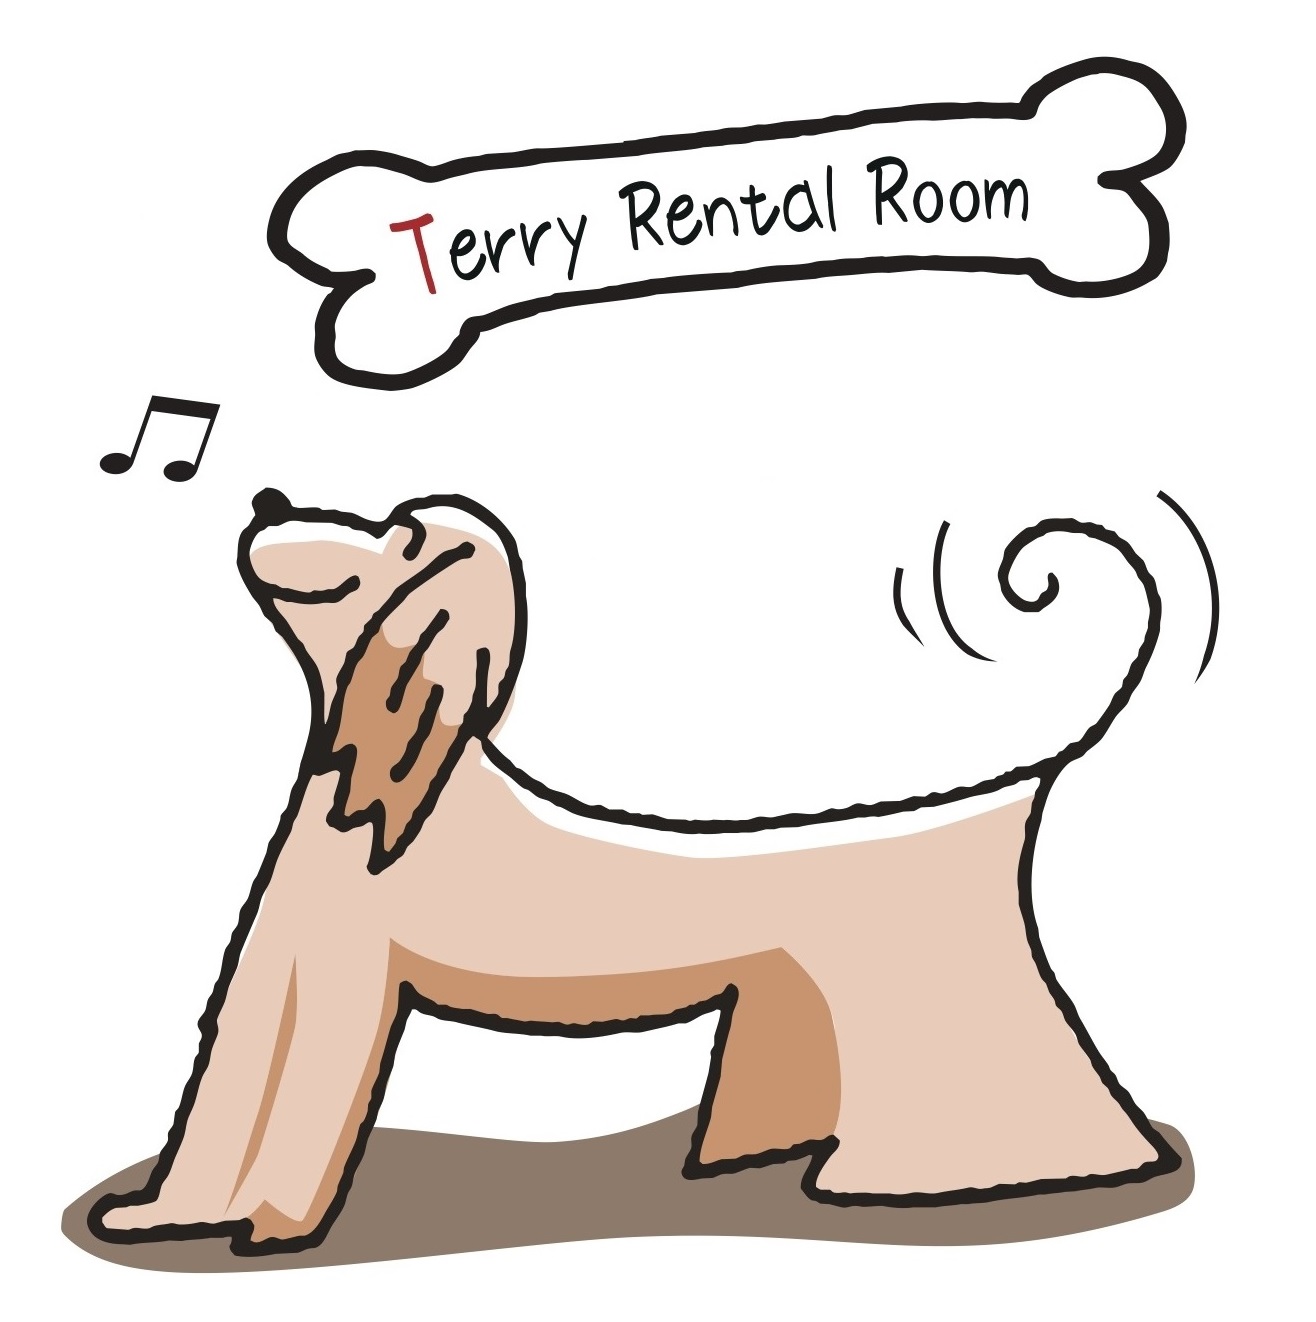 Terry Rental Room